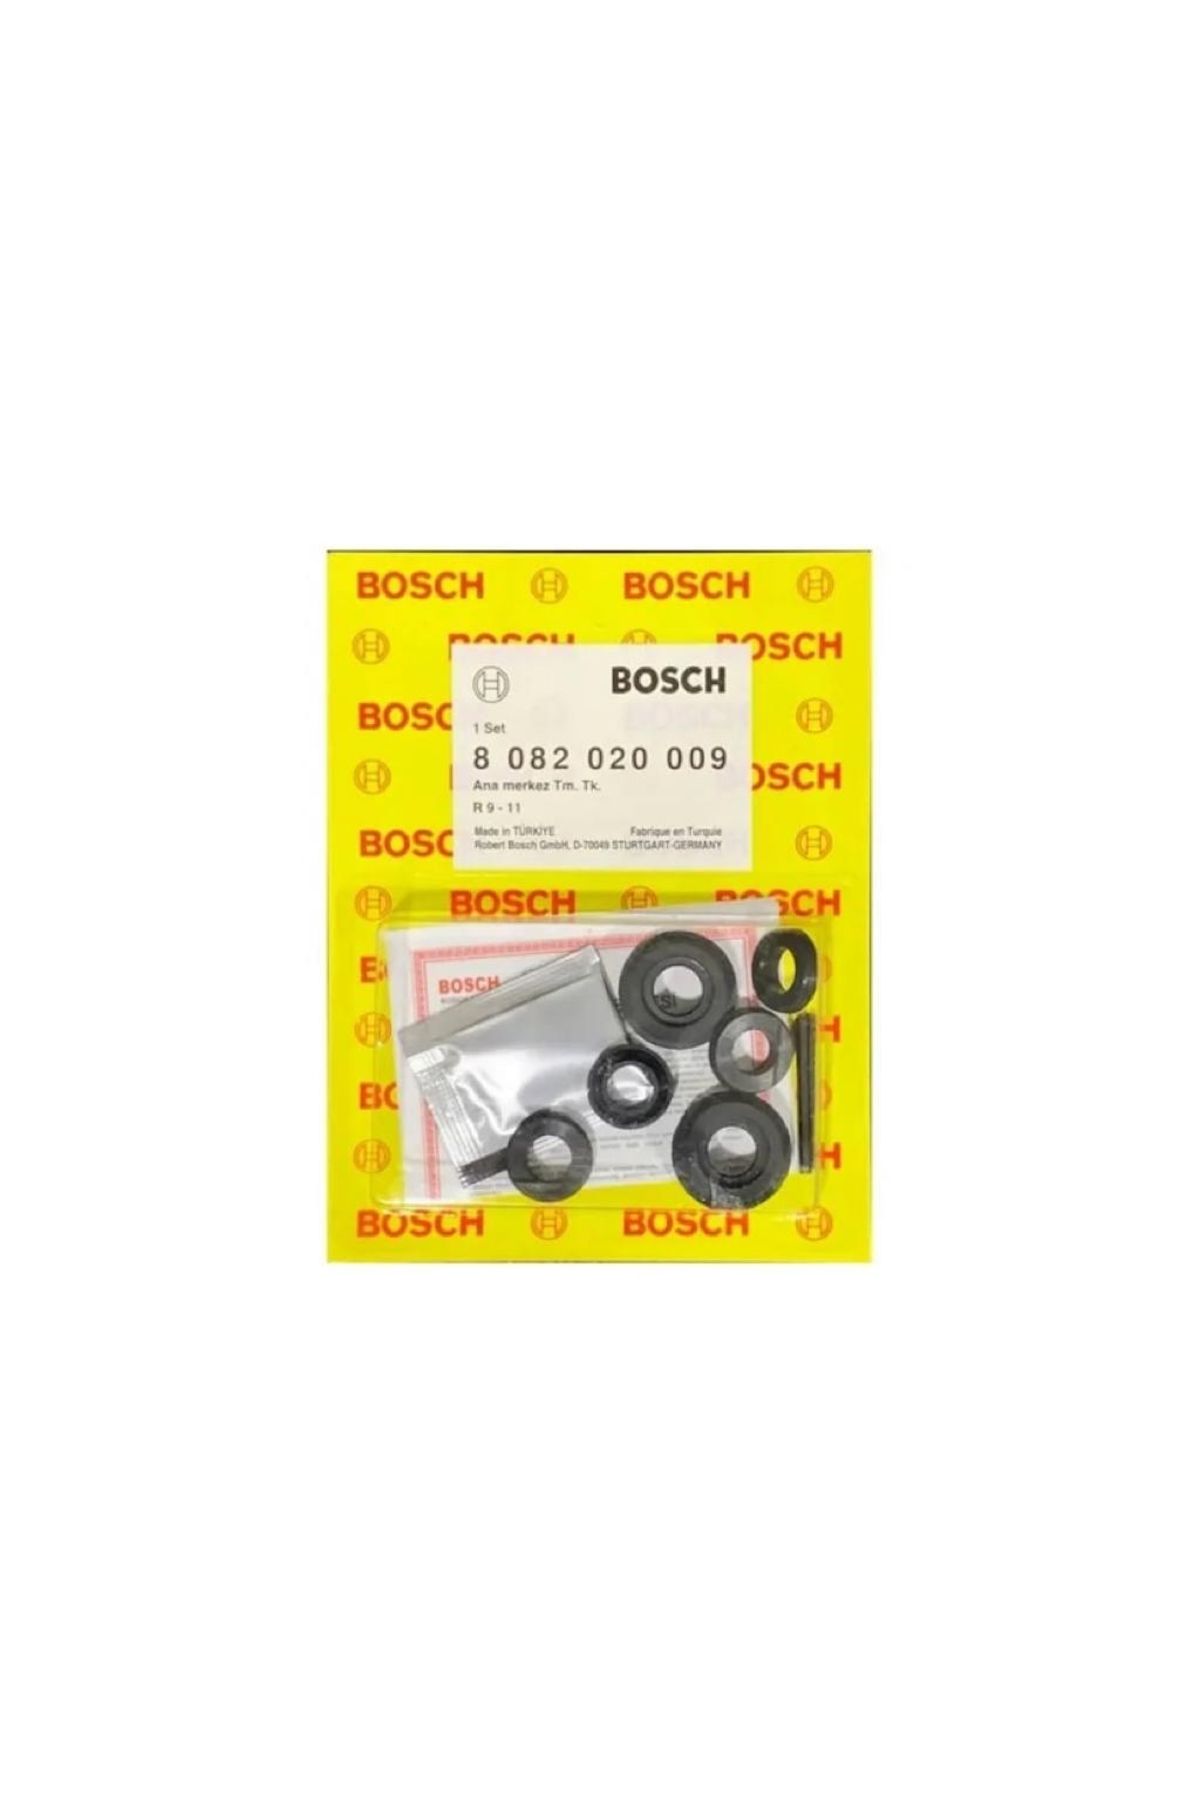 Bosch TOFAŞ DOĞAN KARTAL ŞAHİN RENAULT 12 ANA MERKEZ TAMİR TAKIMI